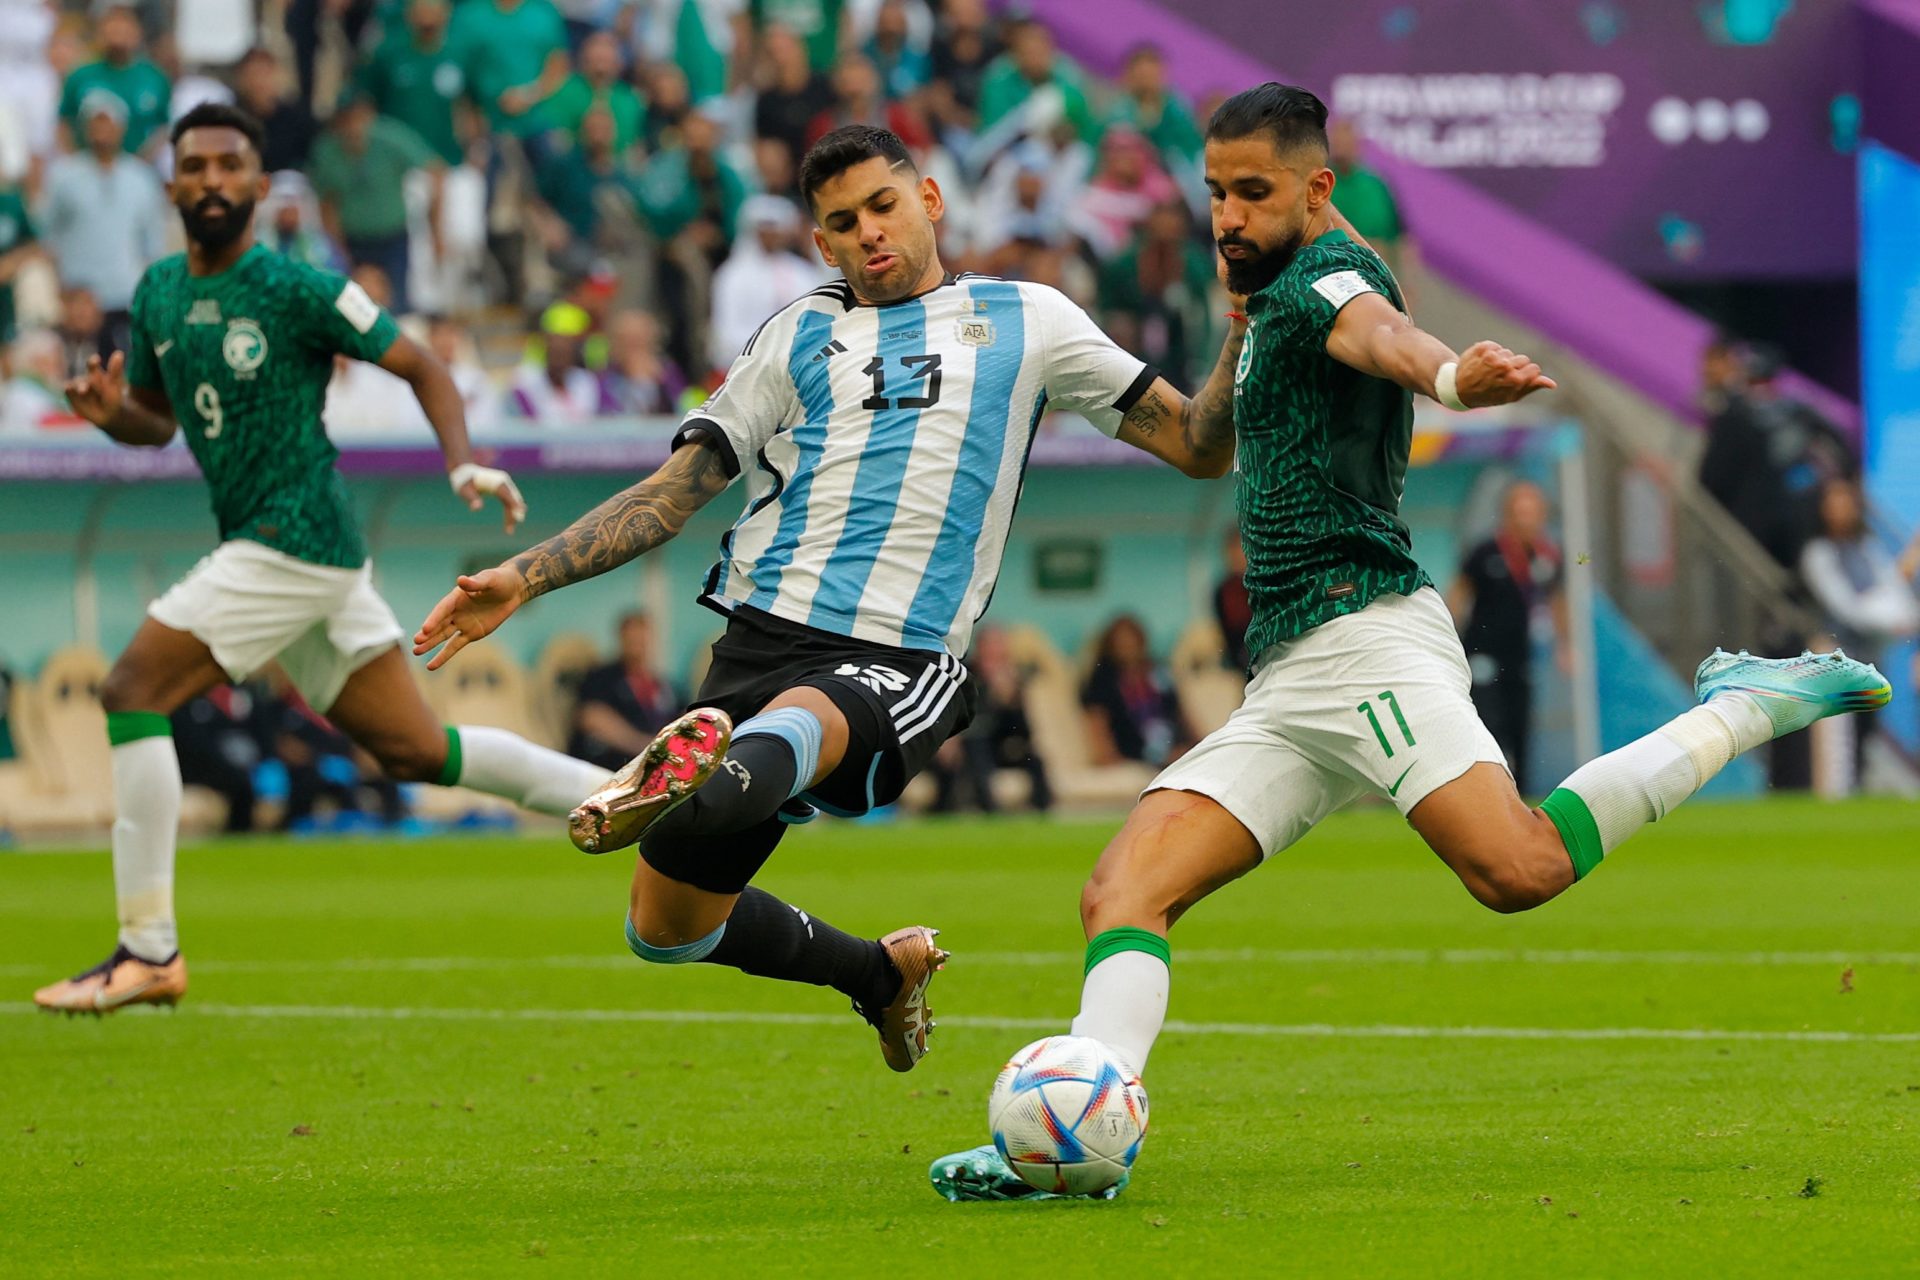 Tottenham Hotspur and Argentina ace Cristian Romero